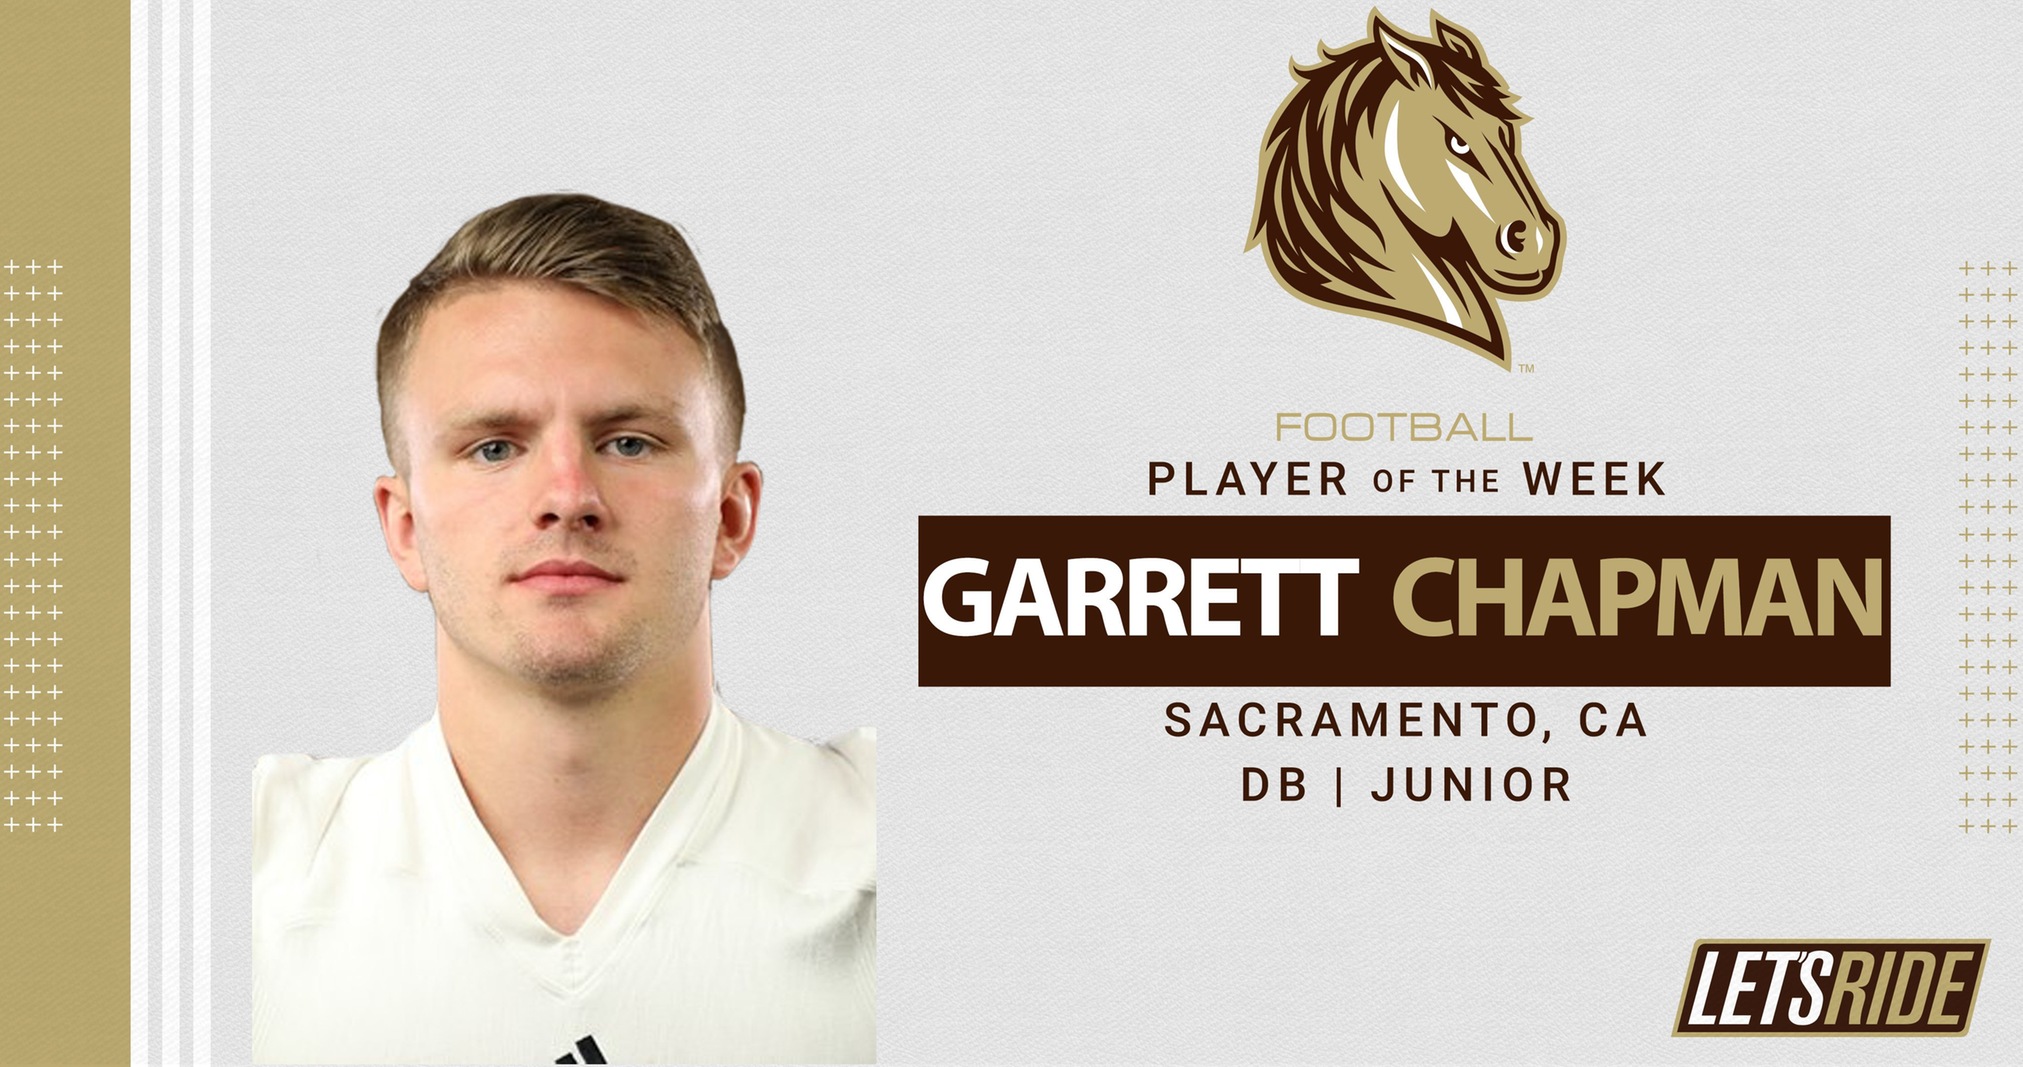 Garrett Chapman
Football Player of the Week
Sacramento, CA
DB Junior